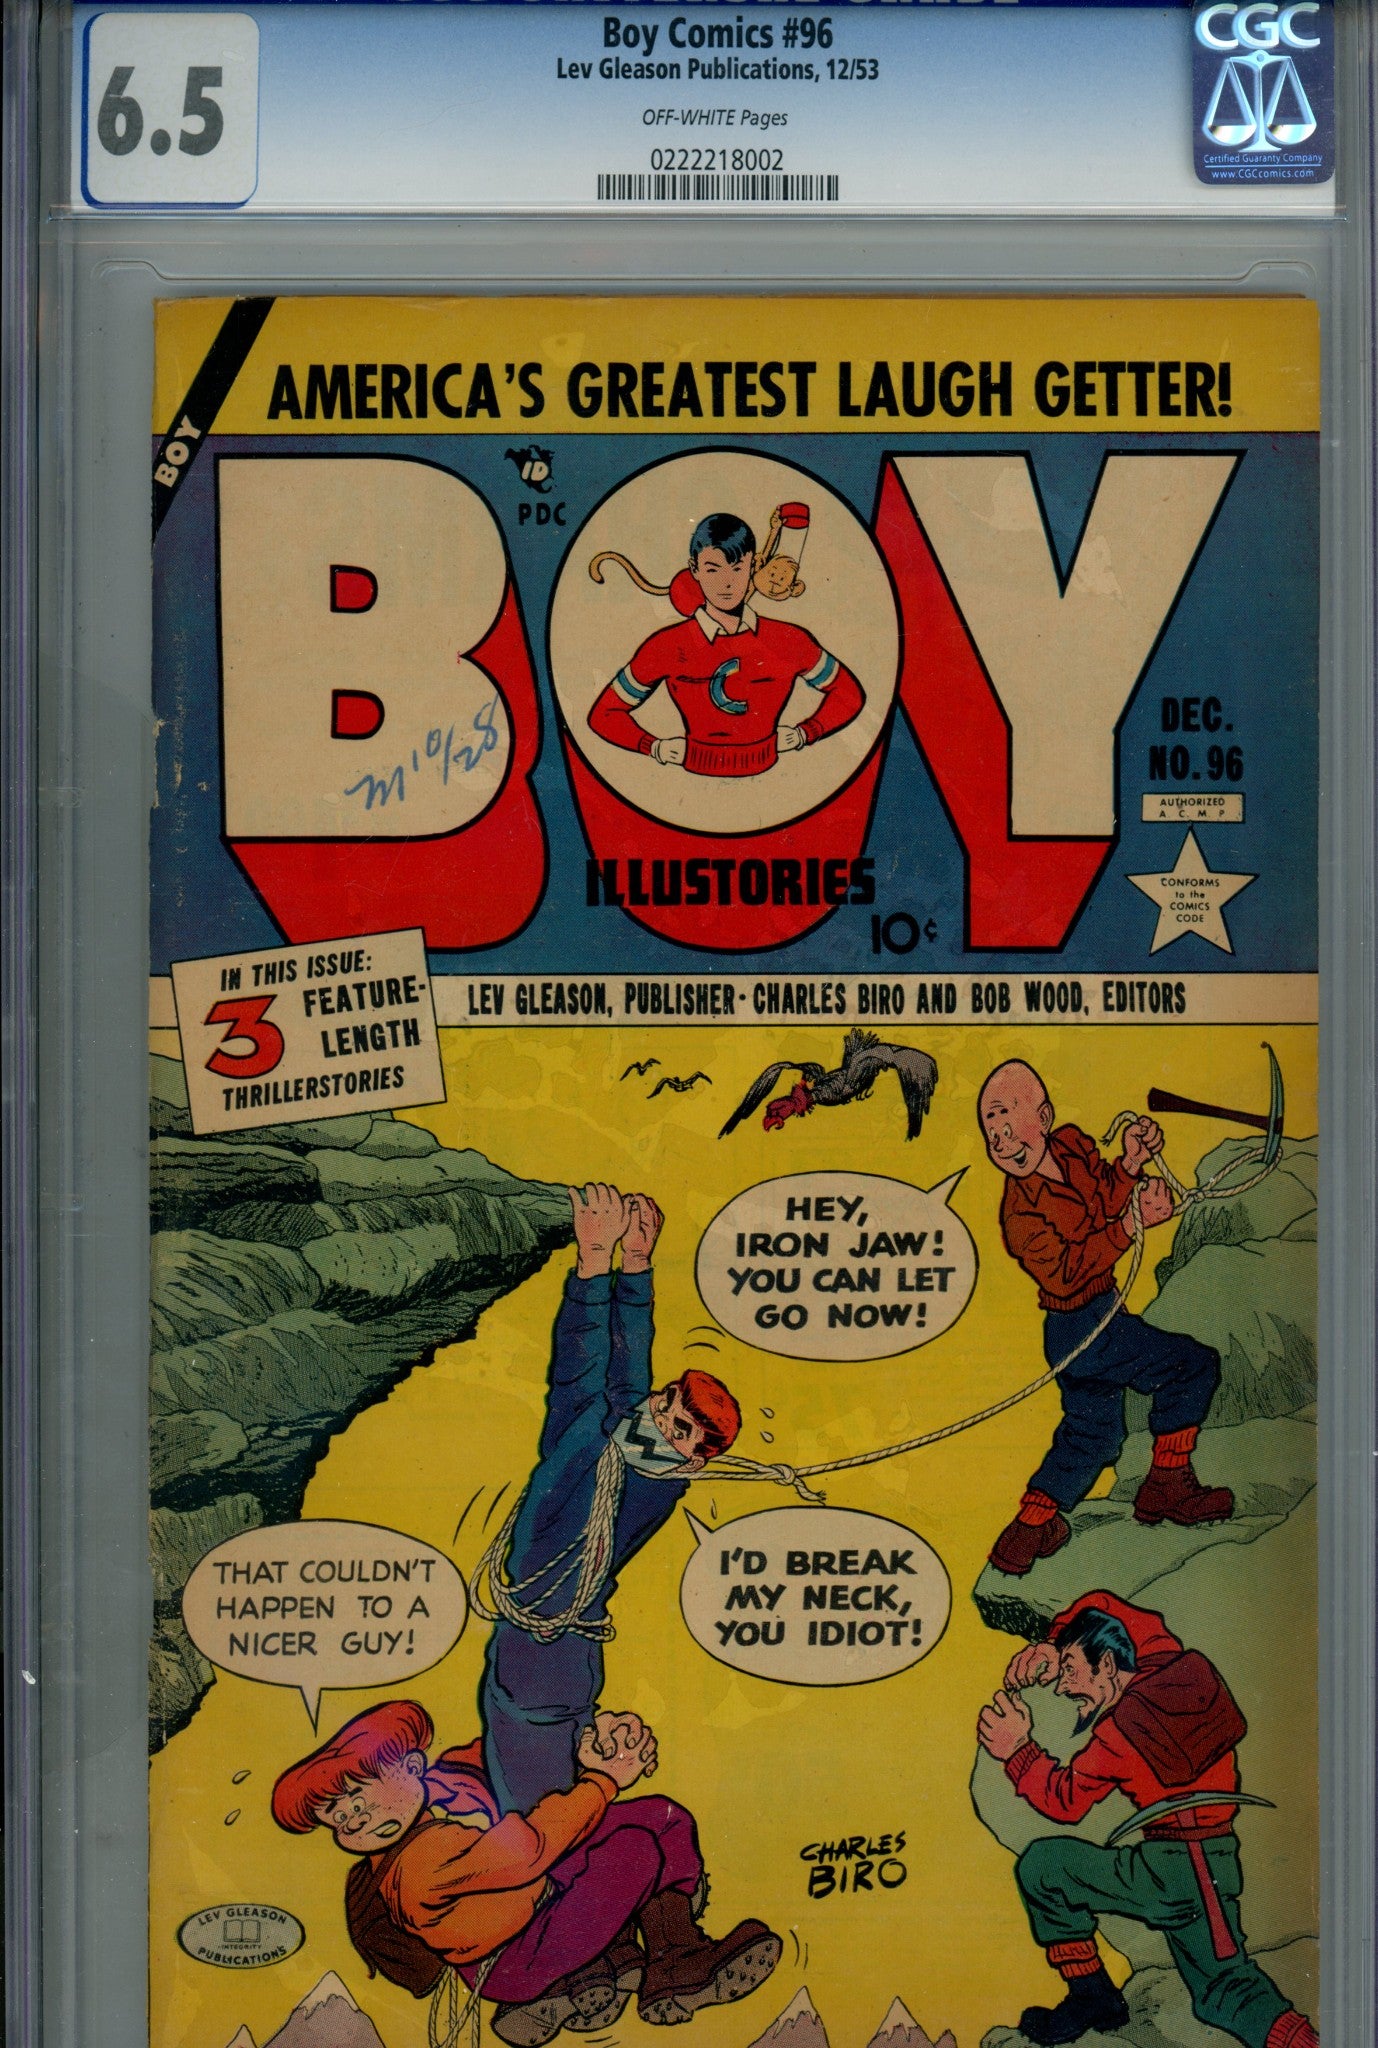 Boy Comics 96 CGC 6.5 (1953)